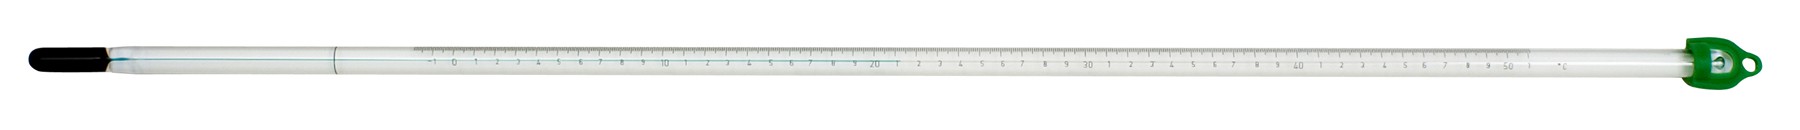 H-B DURAC Plus Precision Liquid-In-Glass Thermometer; 30 to 394F, 76mm Immersion, Organic Liquid Fill